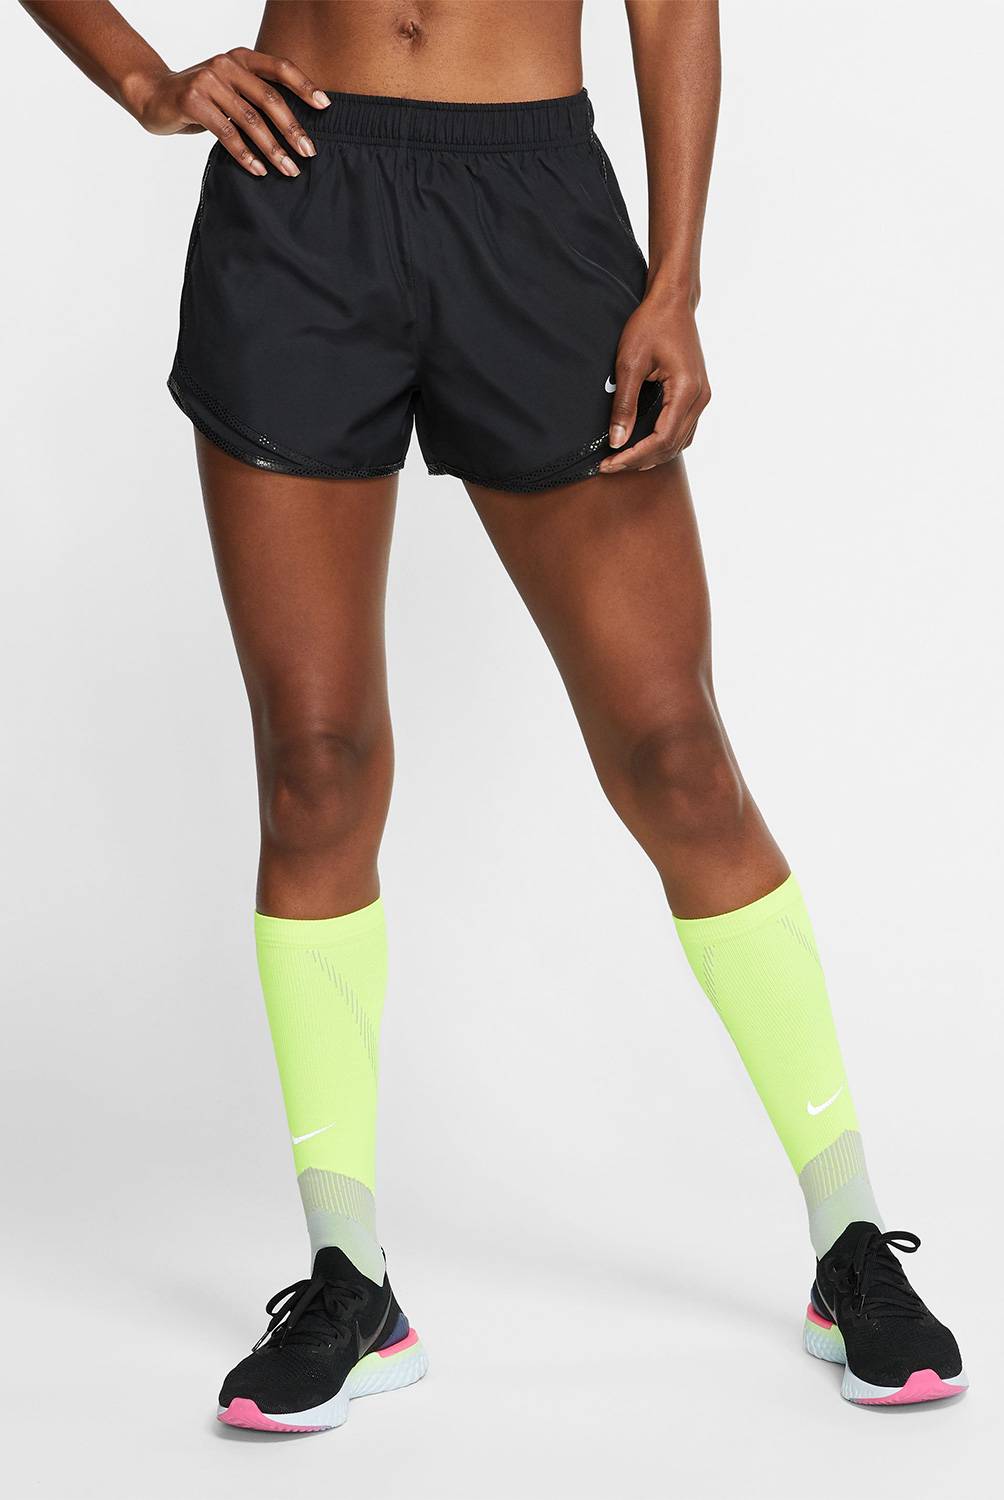 NIKE - Short Running Mujer Nike